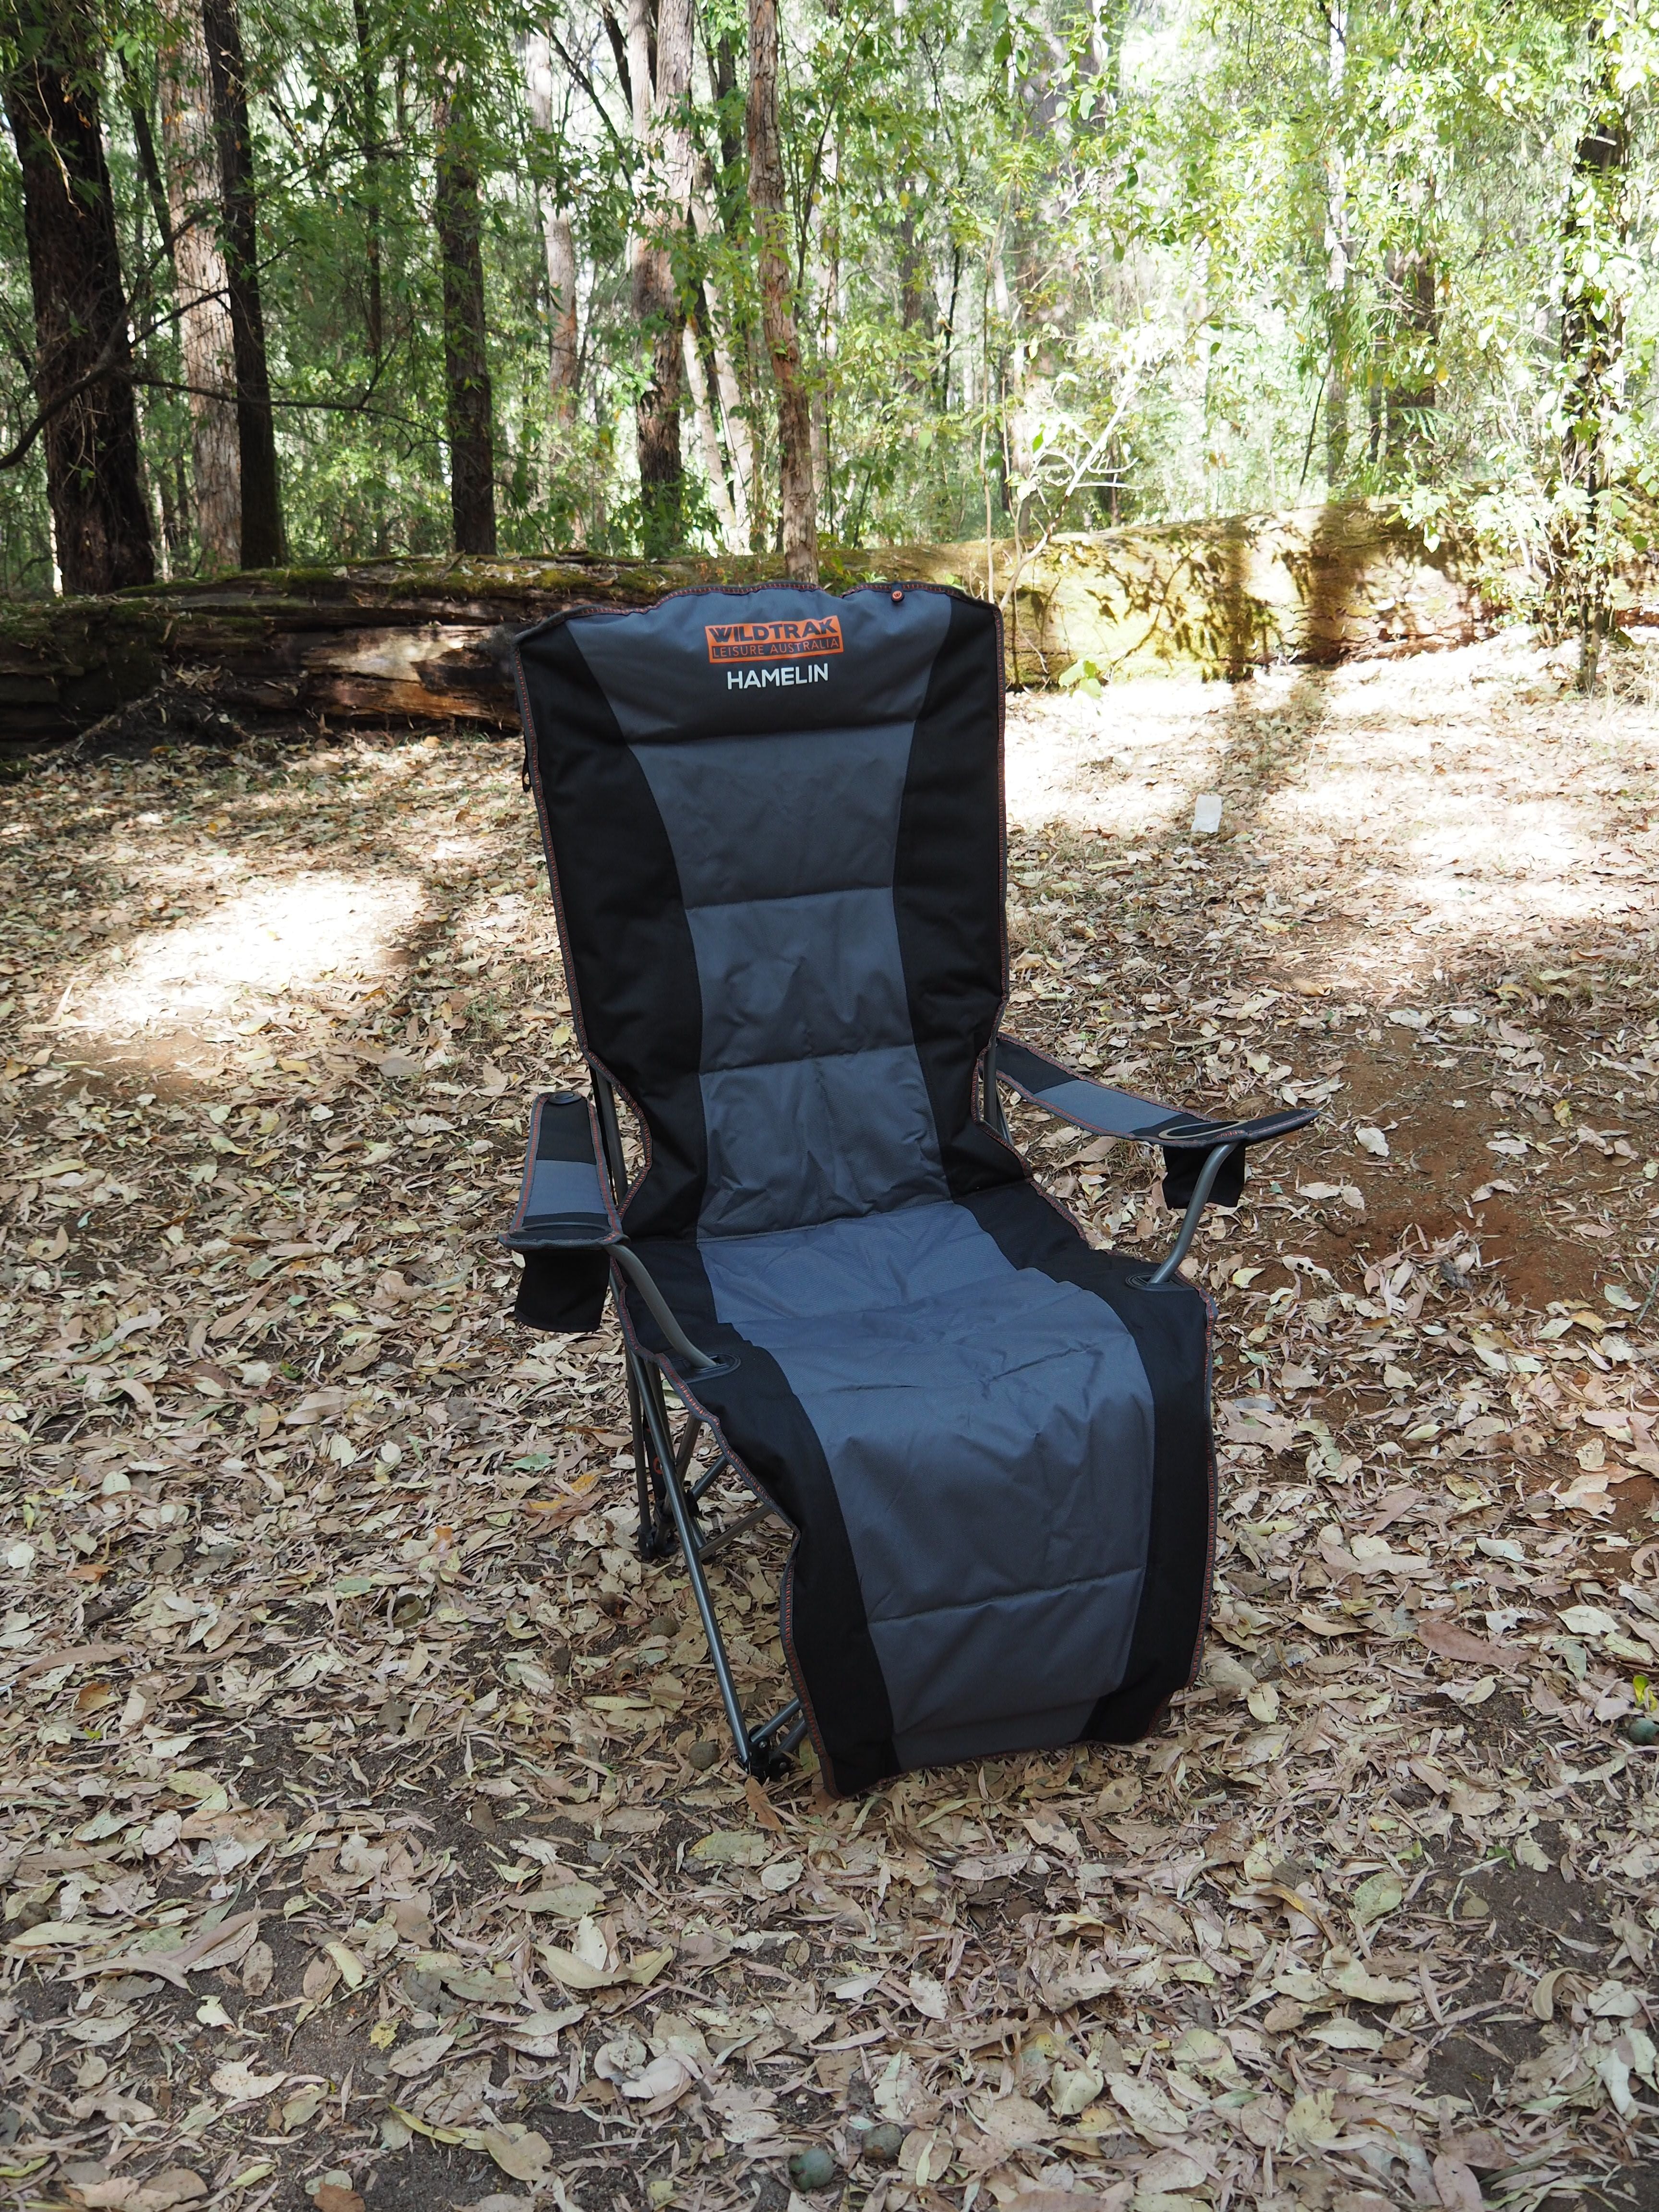 Wildtrak™ Hamelin Reclining Camp Chair Lounger: Enjoy Extreme Comfort